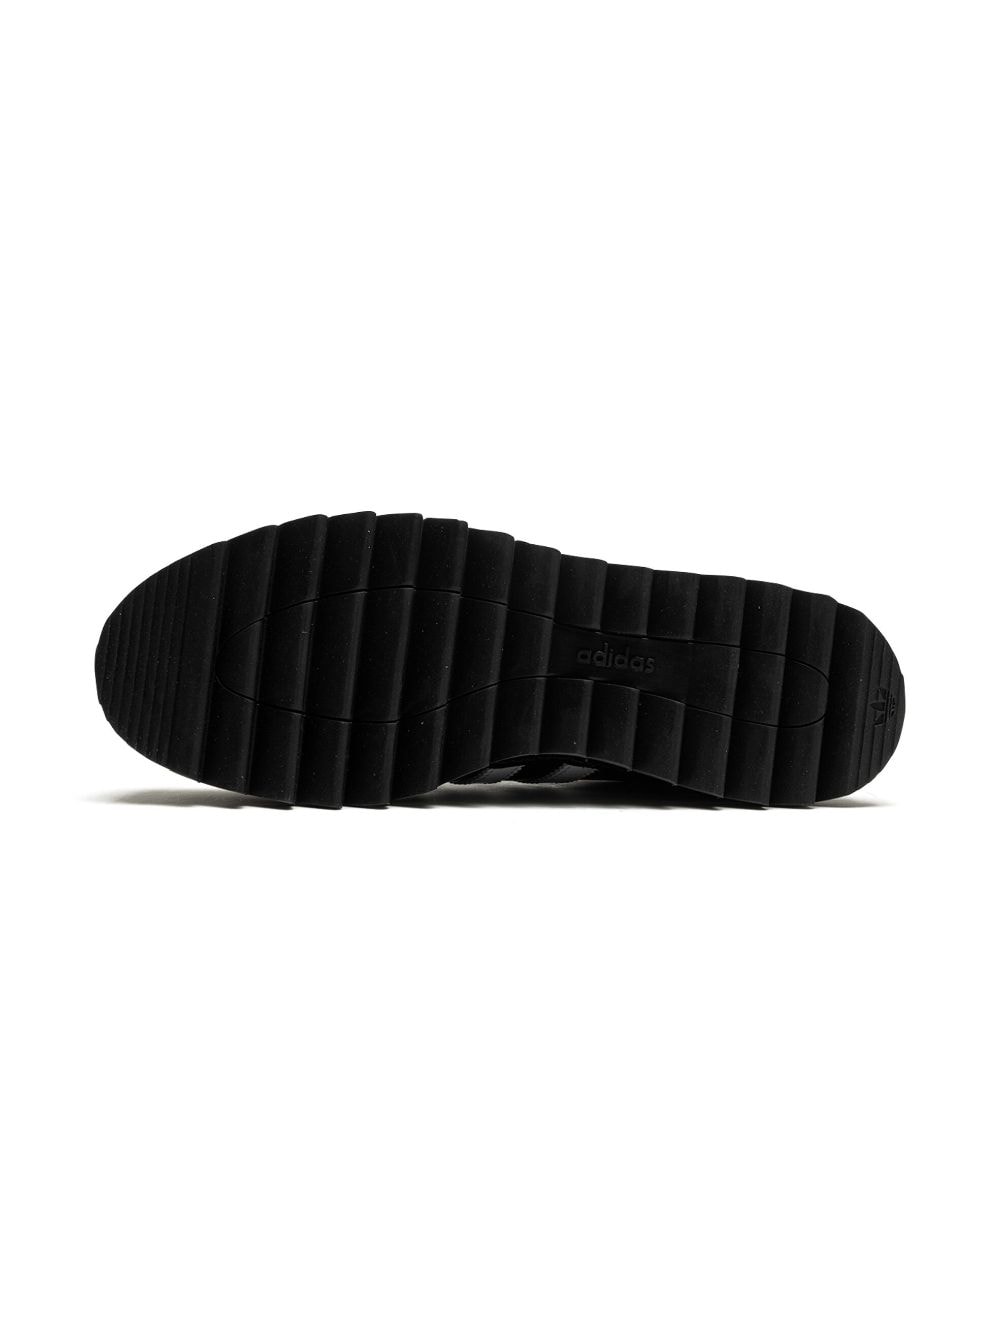 adidas x Clot Superstar "Black" sneakers